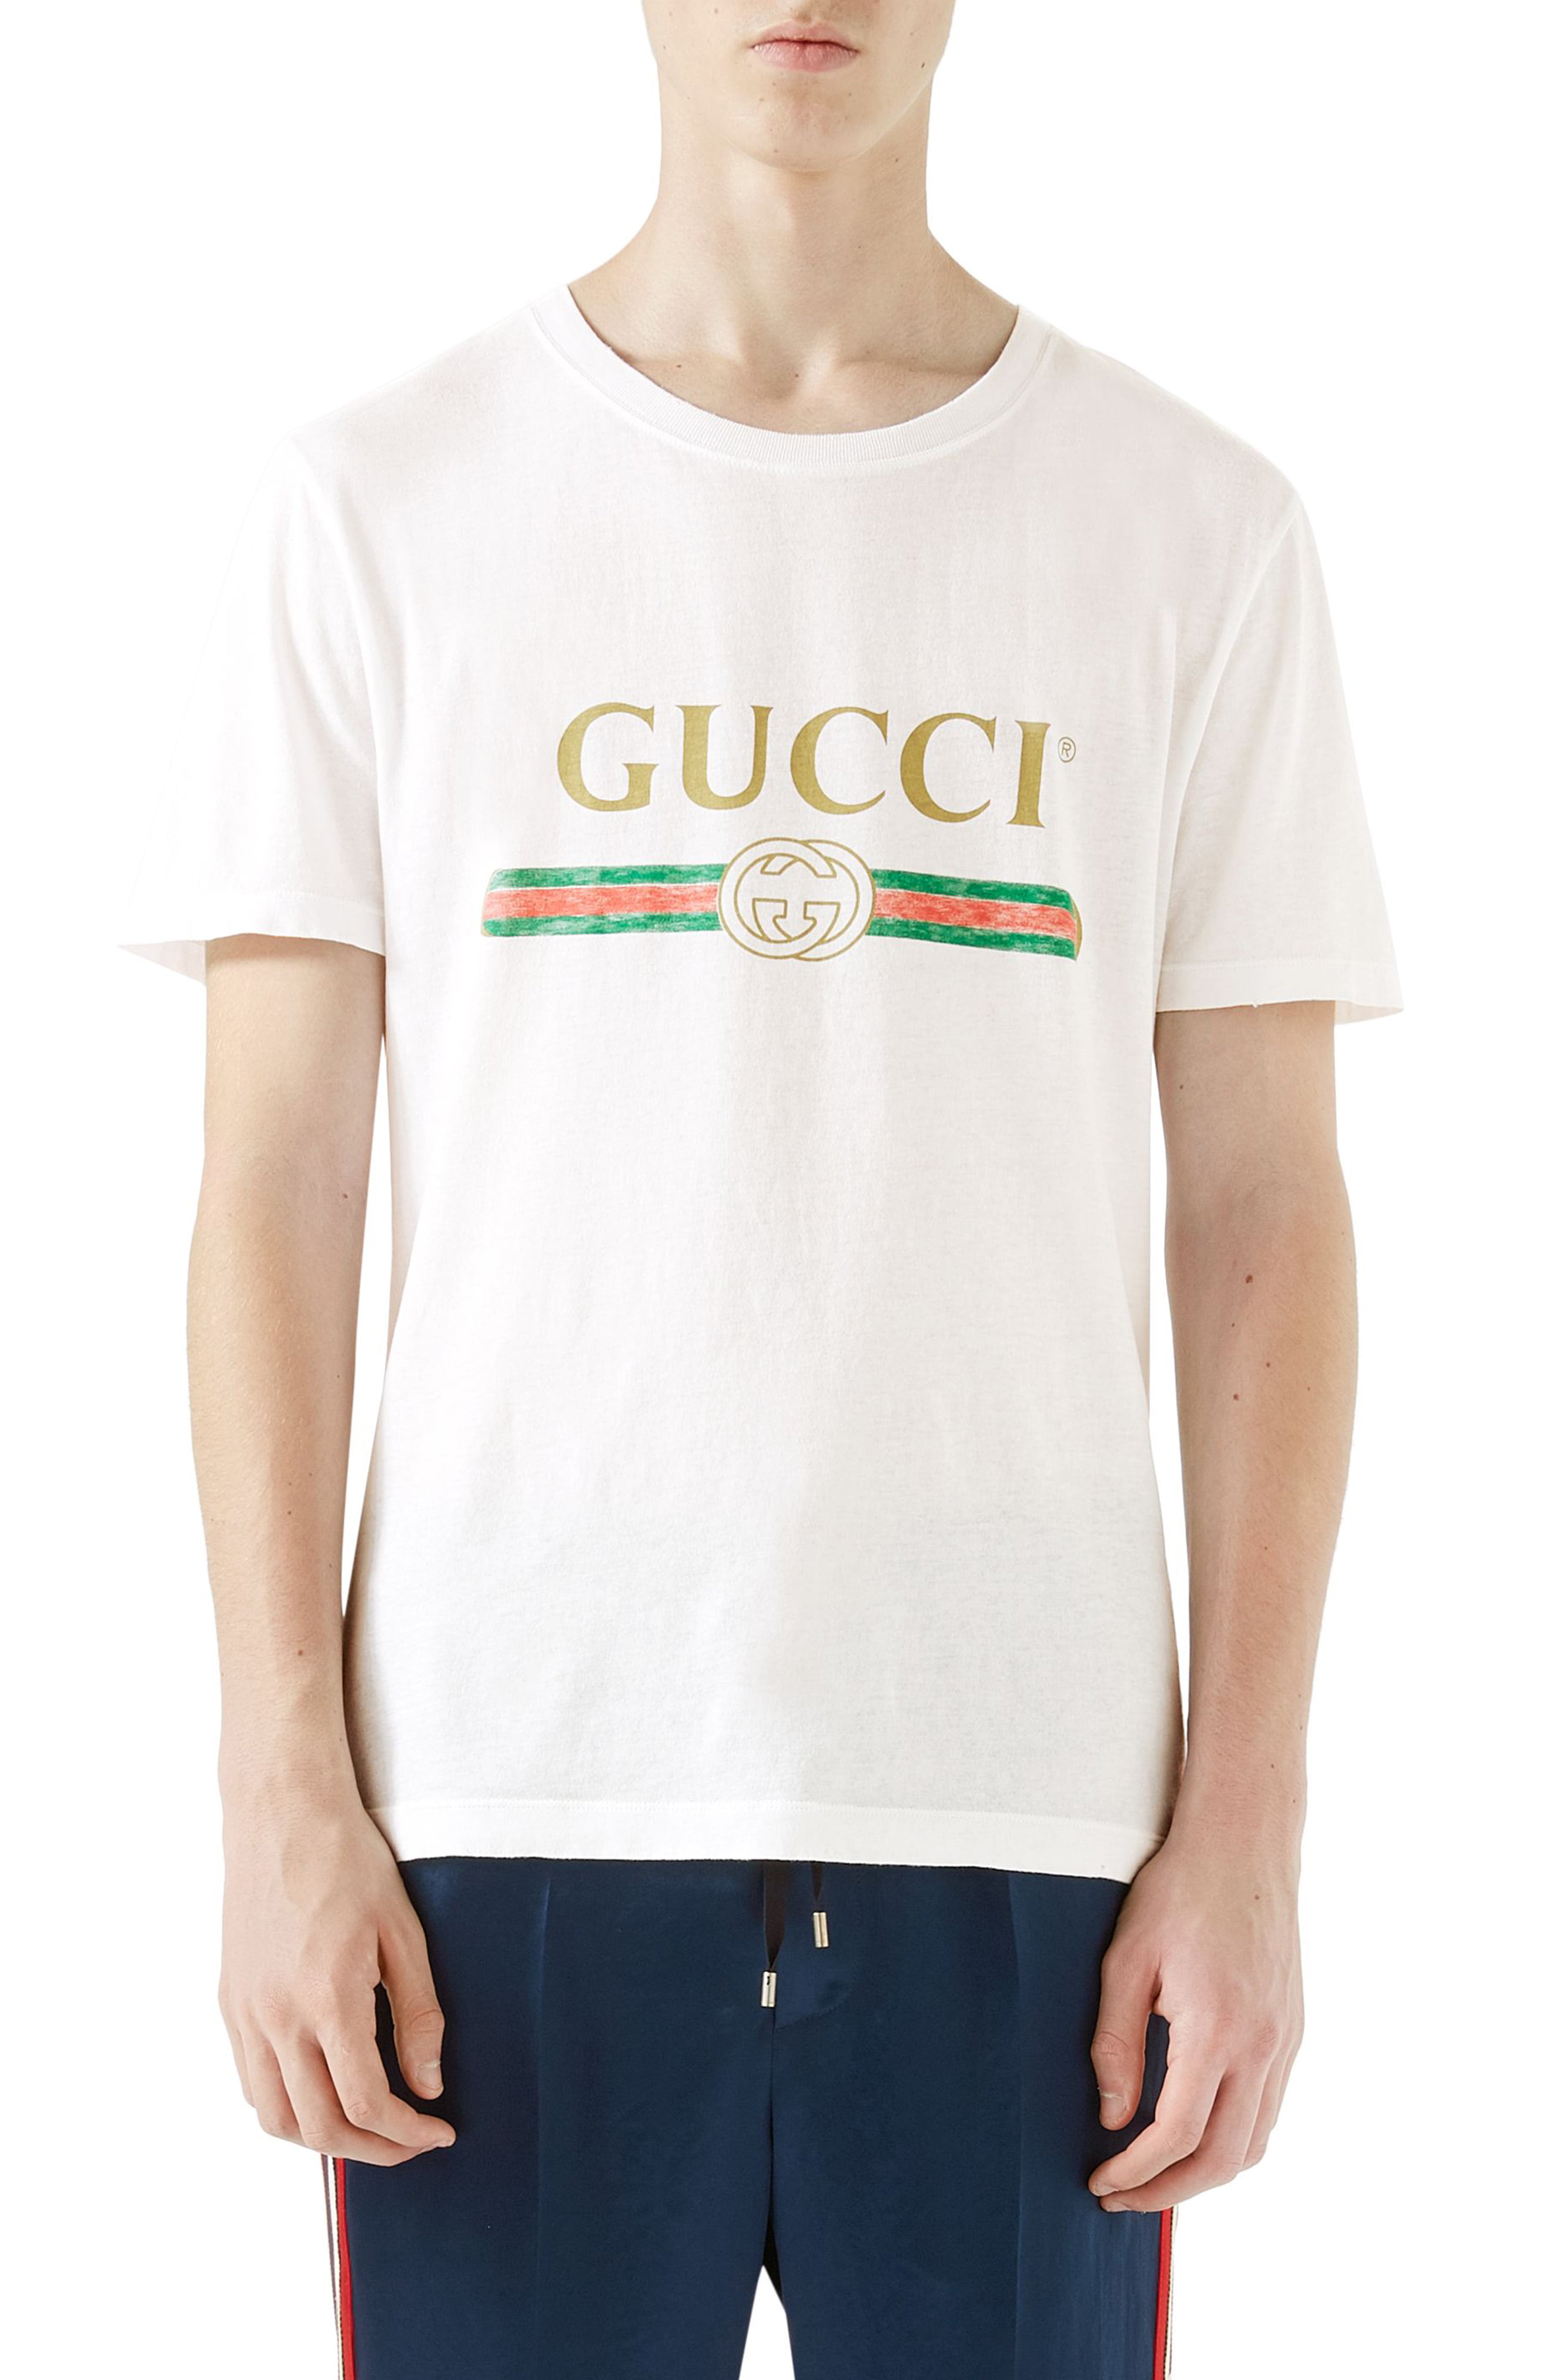 price of gucci shirt